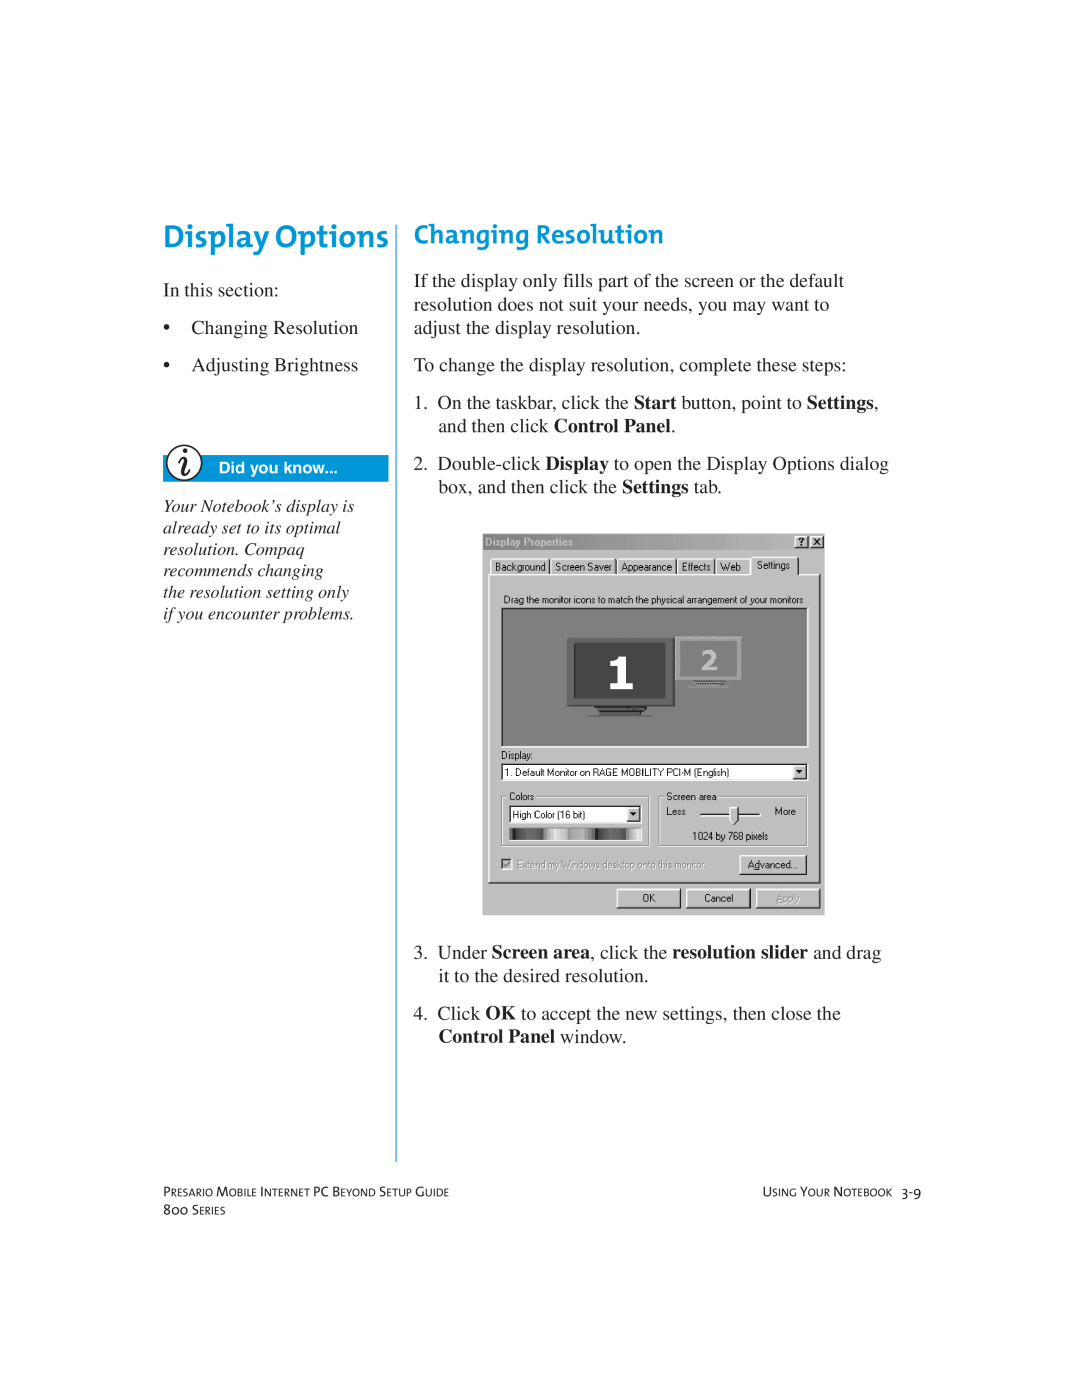 Compaq 800 manual Display Options, Changing Resolution 